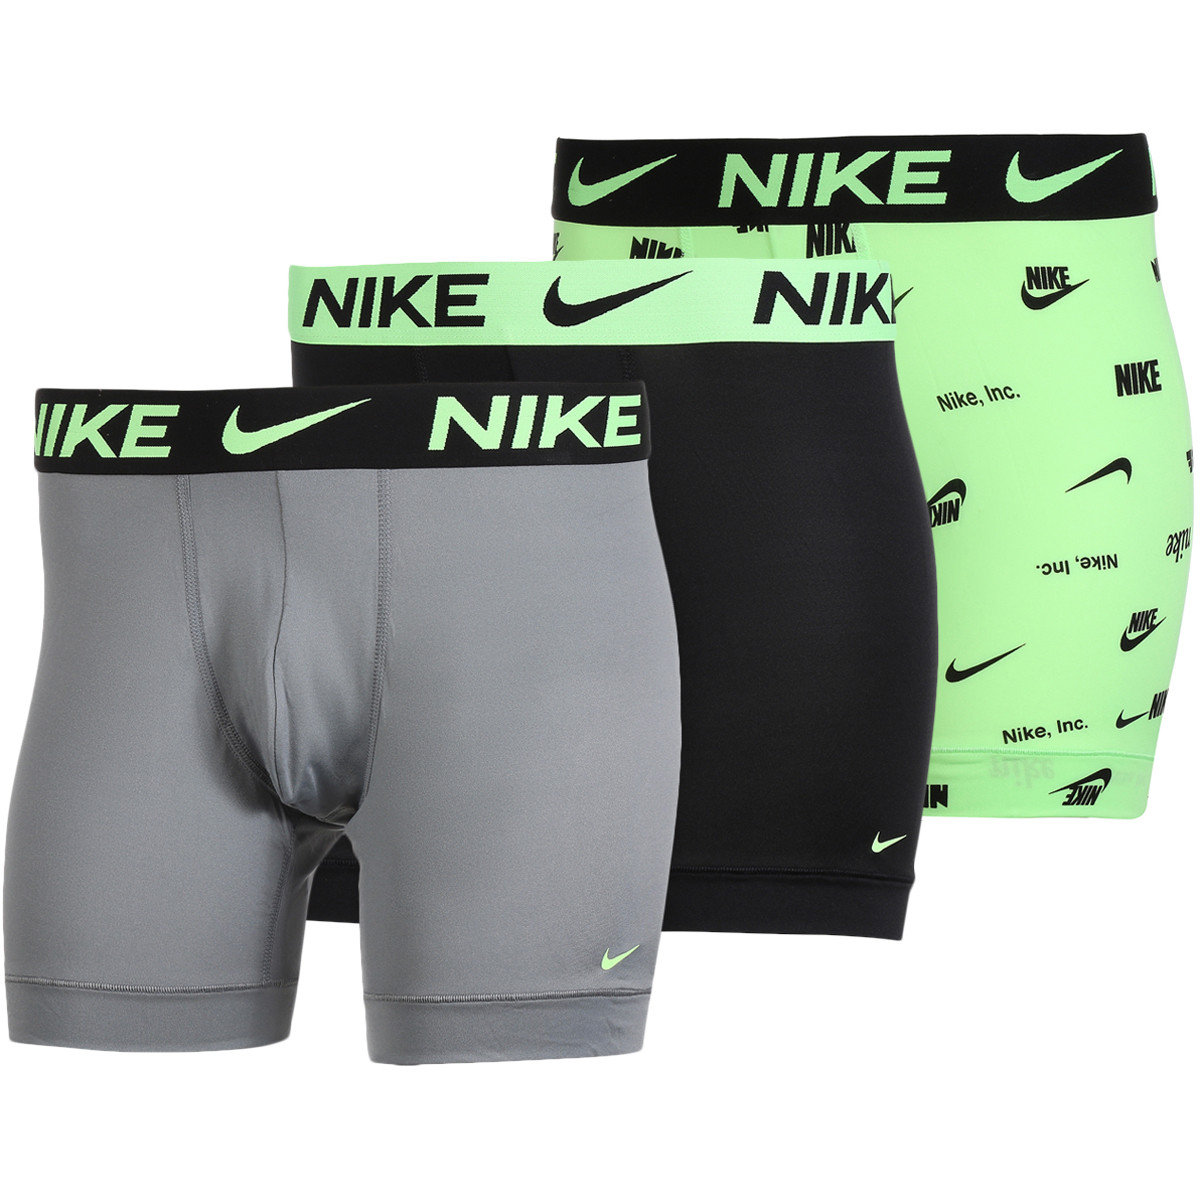 Plus Size Flat Seams Basketball Underwear Synthetic. Nike LU